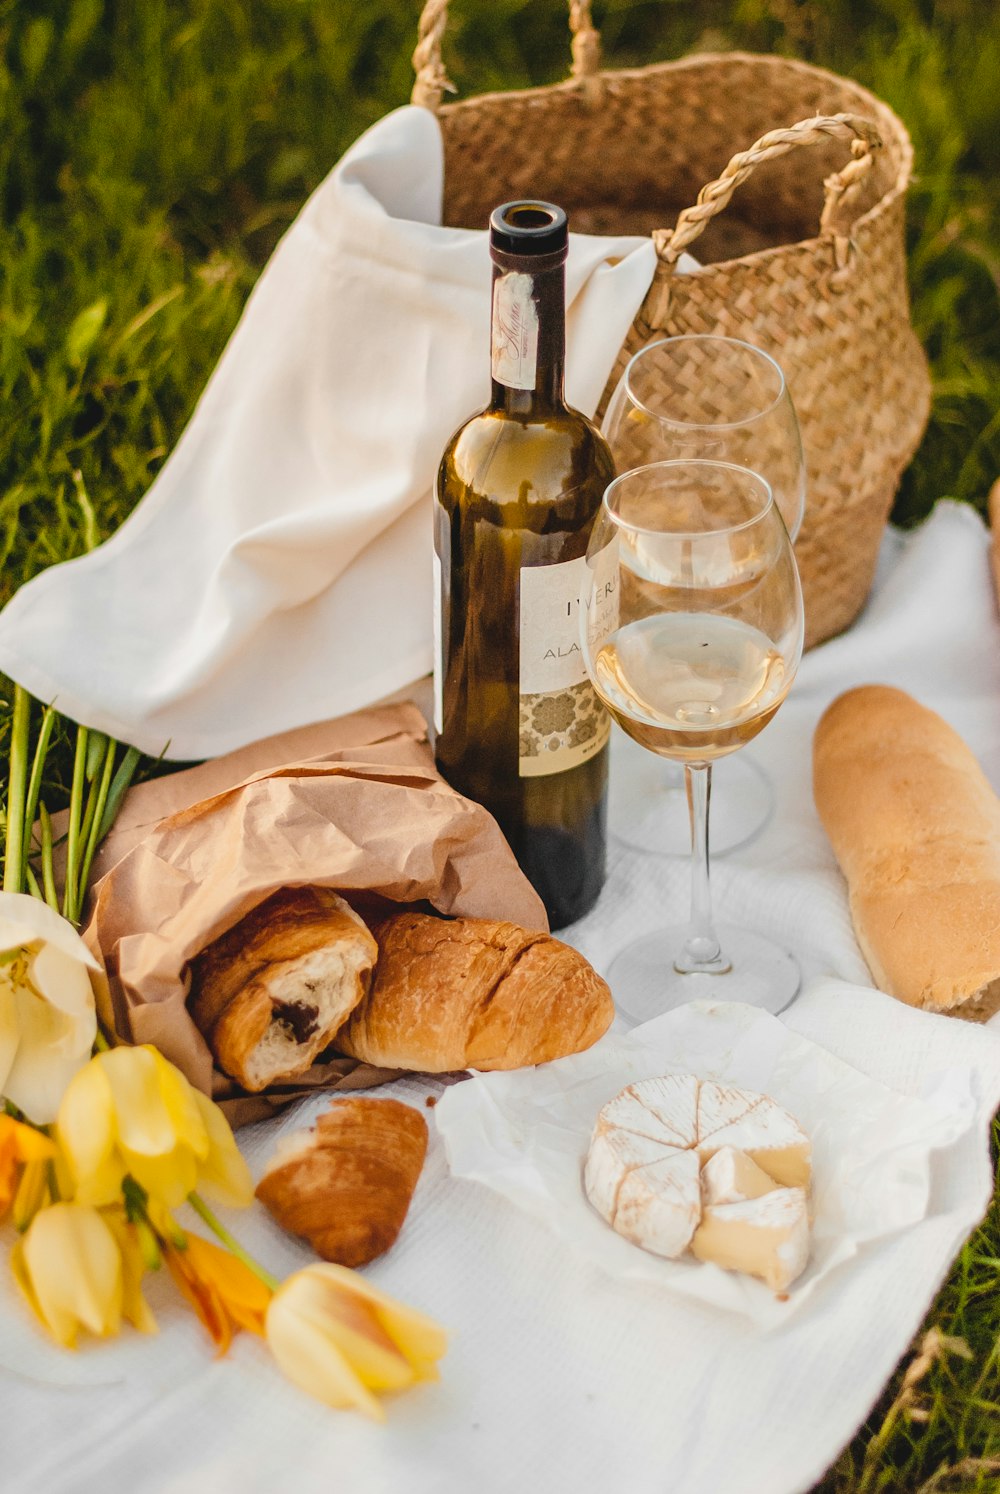 bread and wine bottle on table photo – Free Food Image on Unsplash